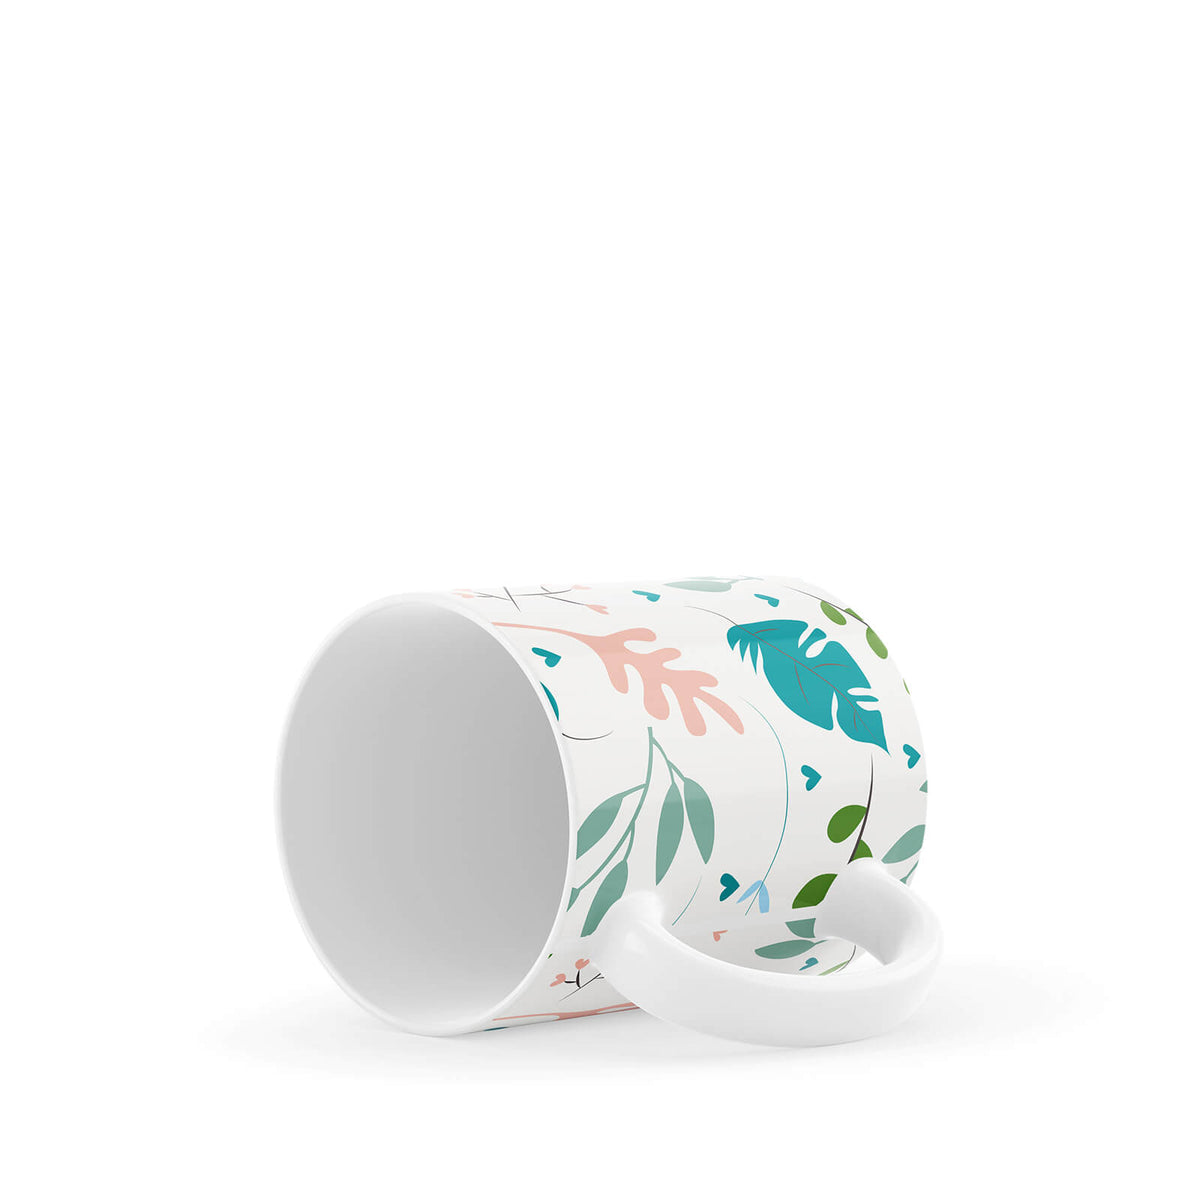 Floral Ceramic Mug